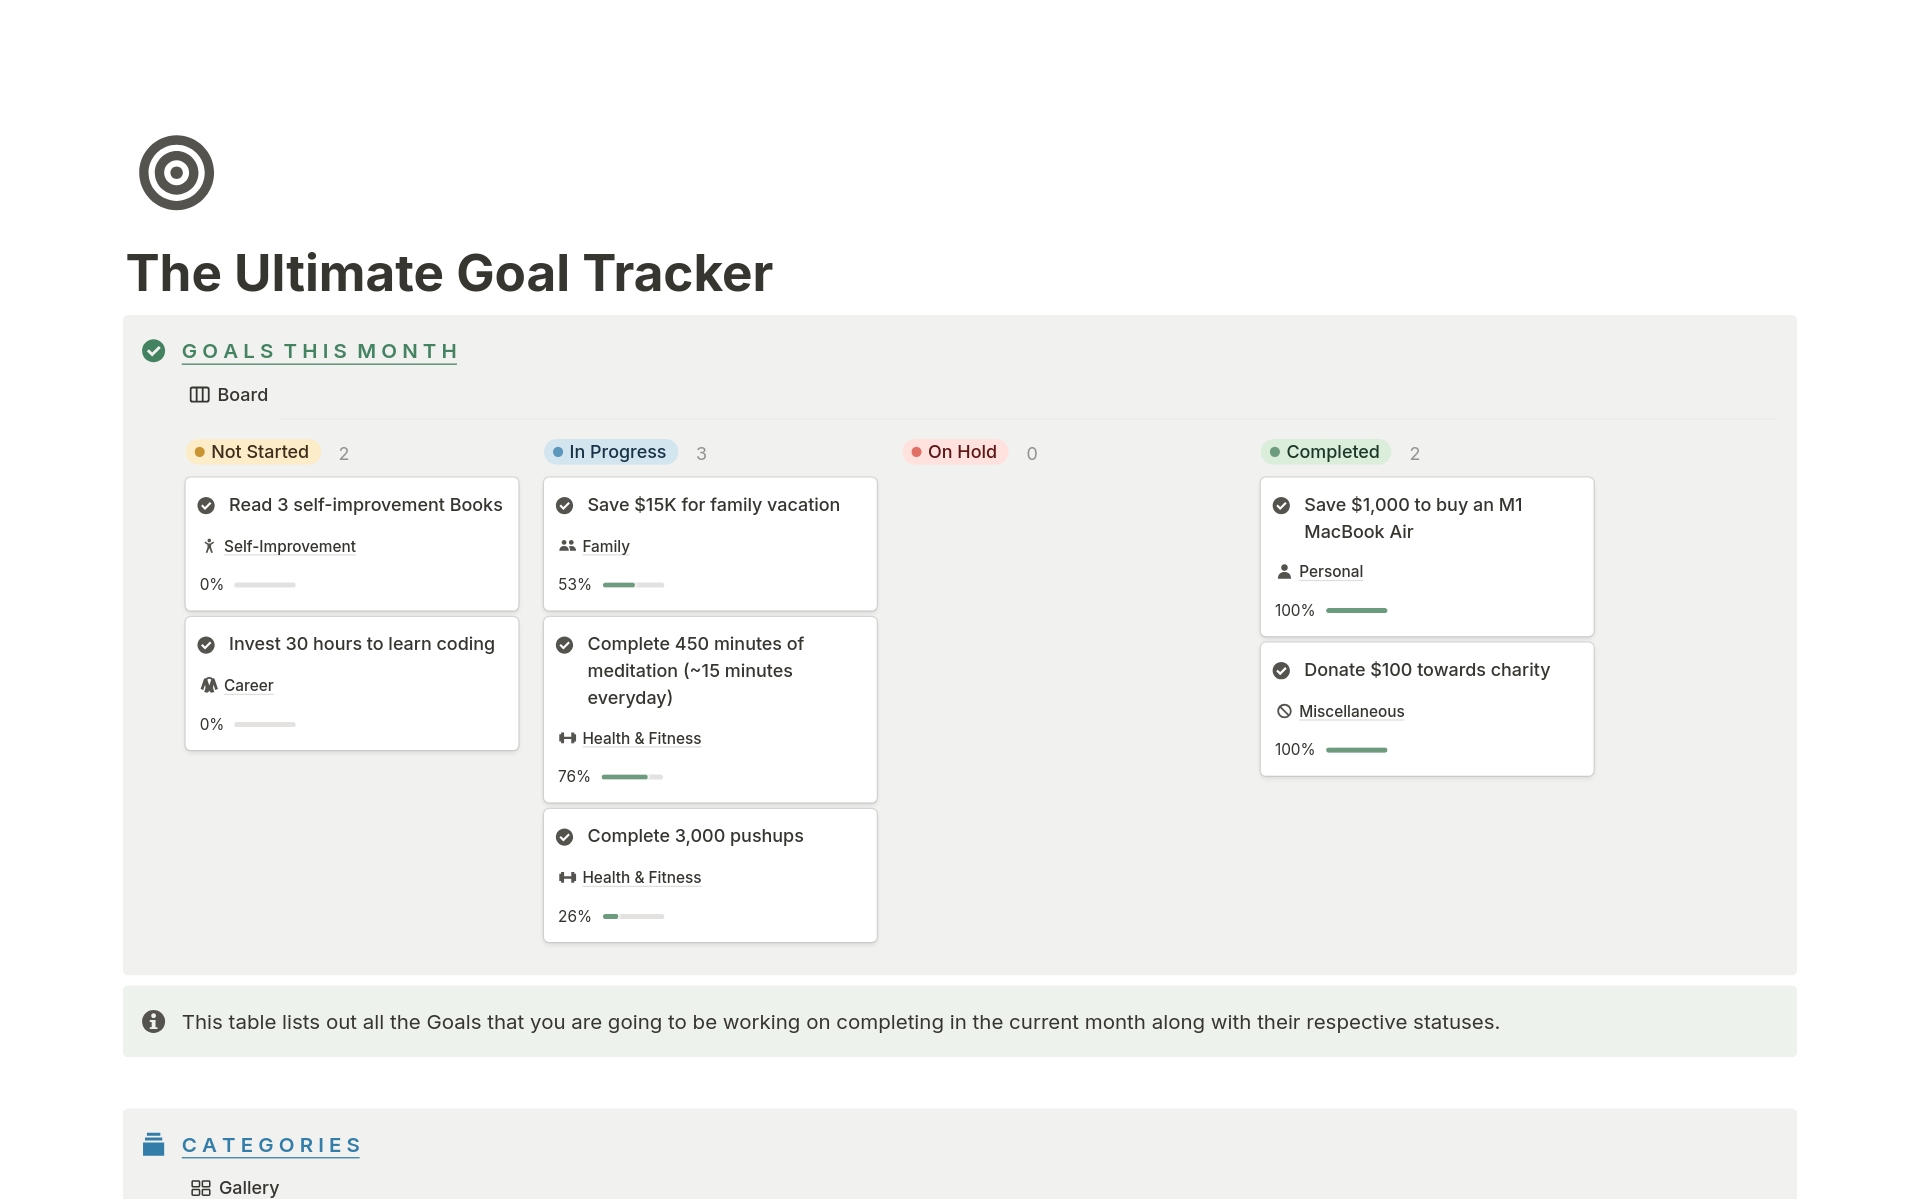 Vista previa de una plantilla para The Ultimate Goal Tracker